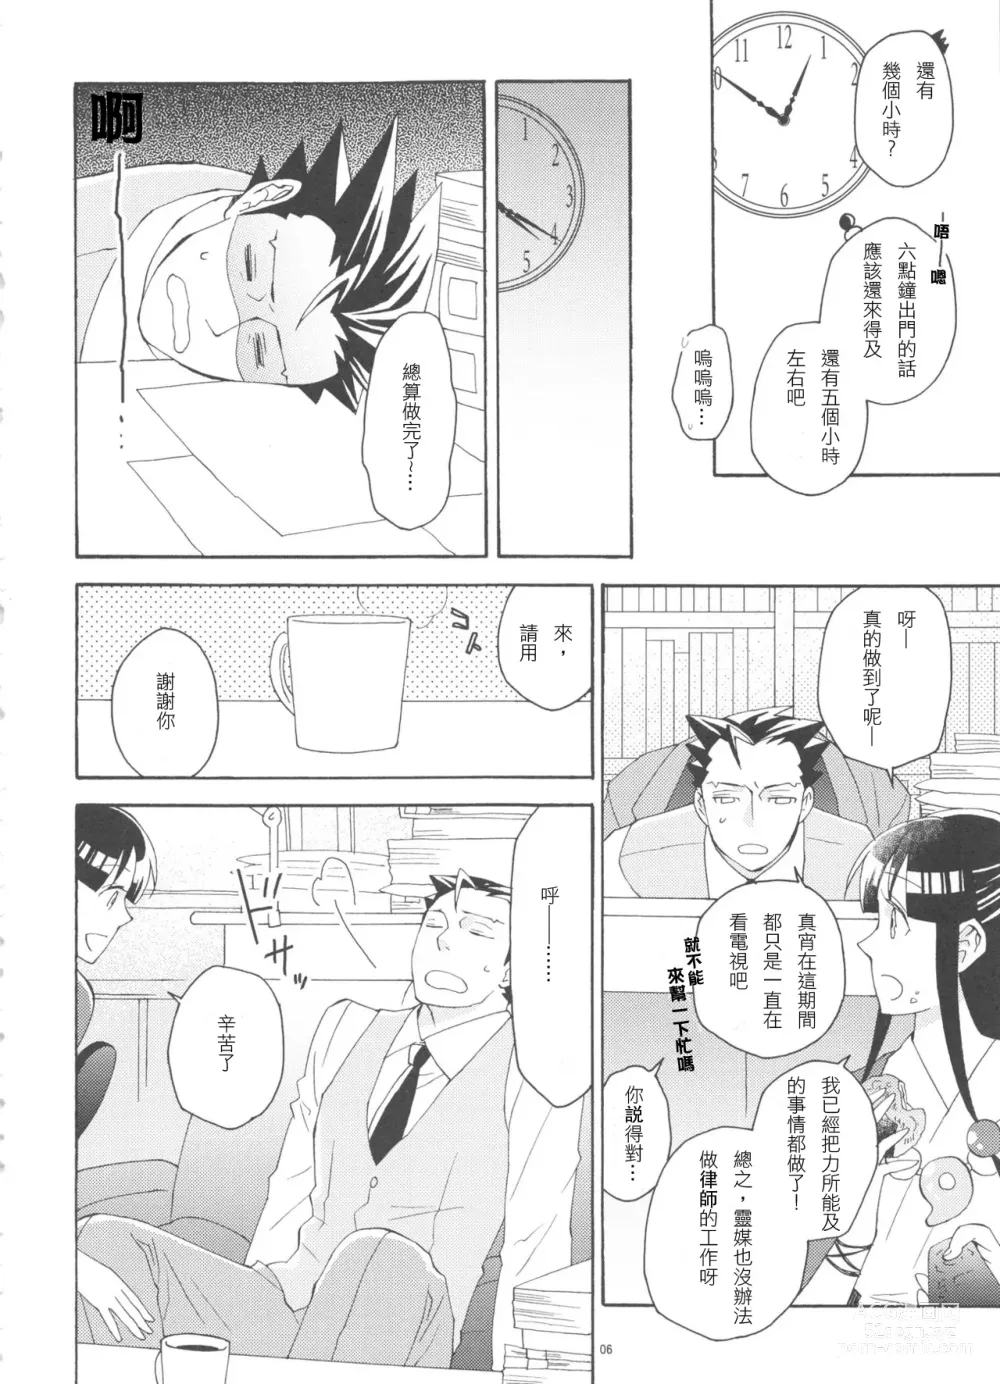 Page 6 of doujinshi 今宵之月仍熠熠生辉